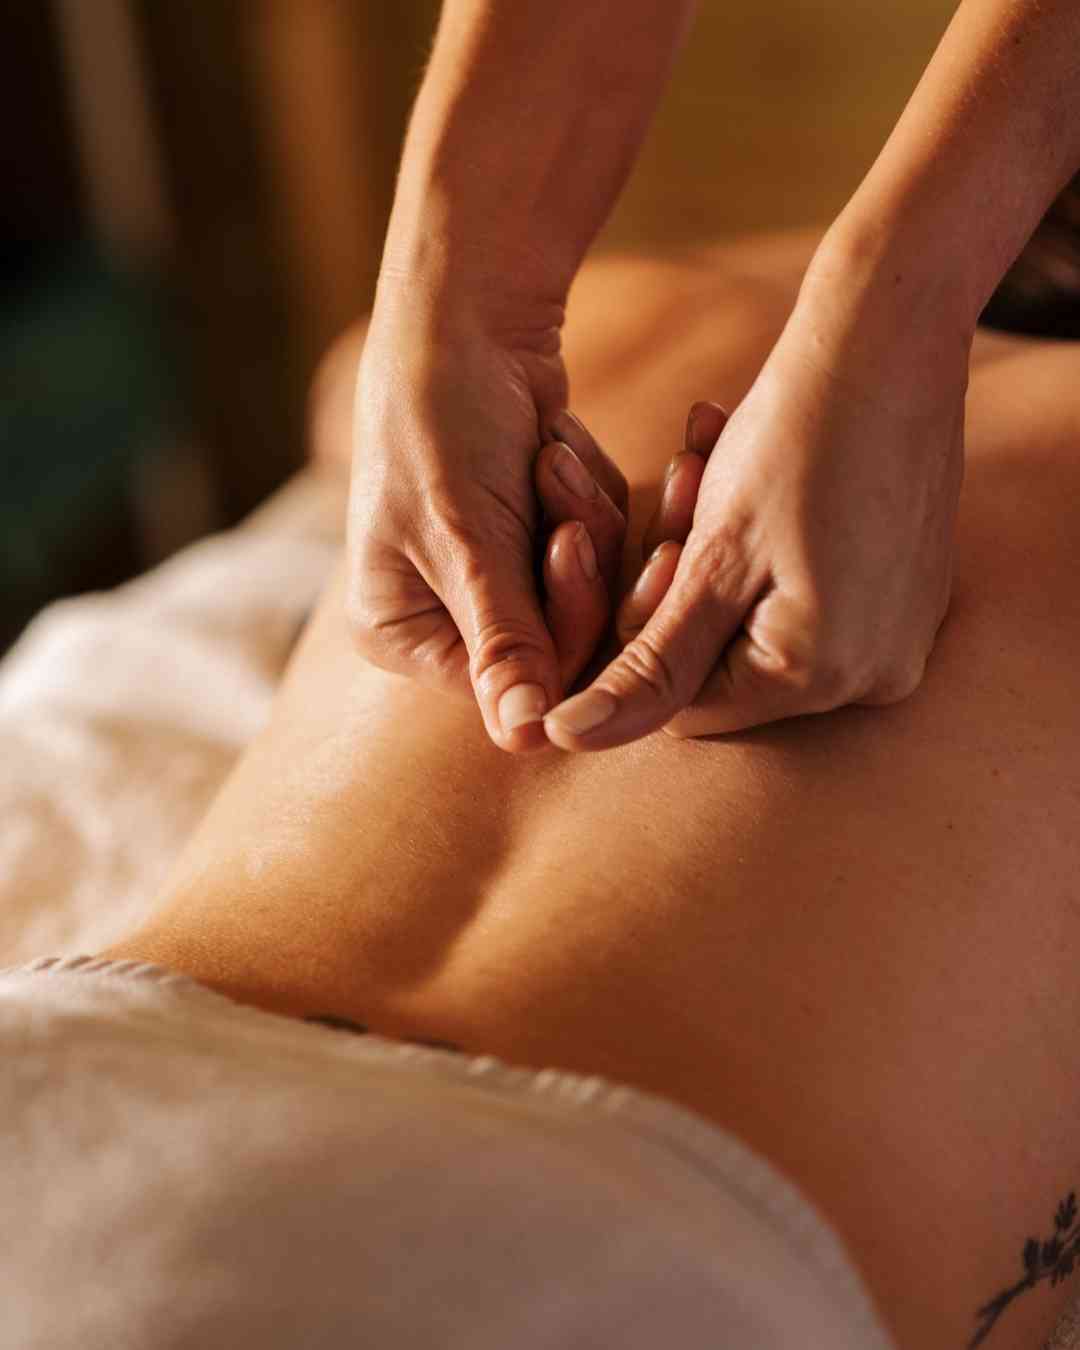 daryn mccoy share female tantric erotic massage photos